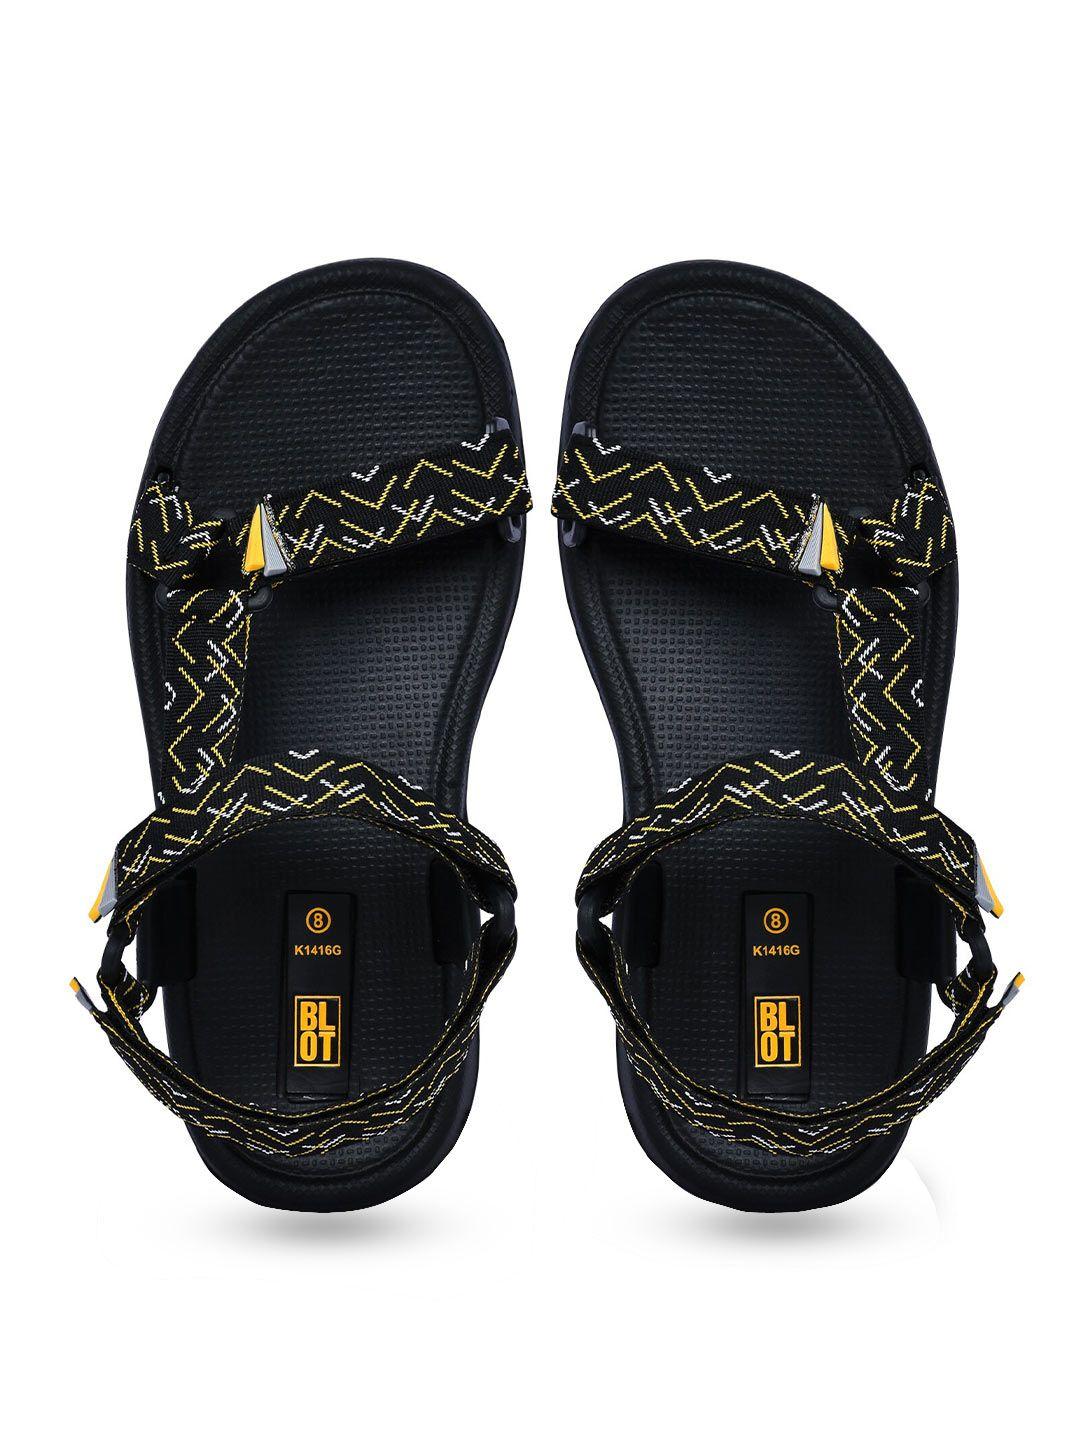 paragon-men-printed-lightweight-comfort-sandals